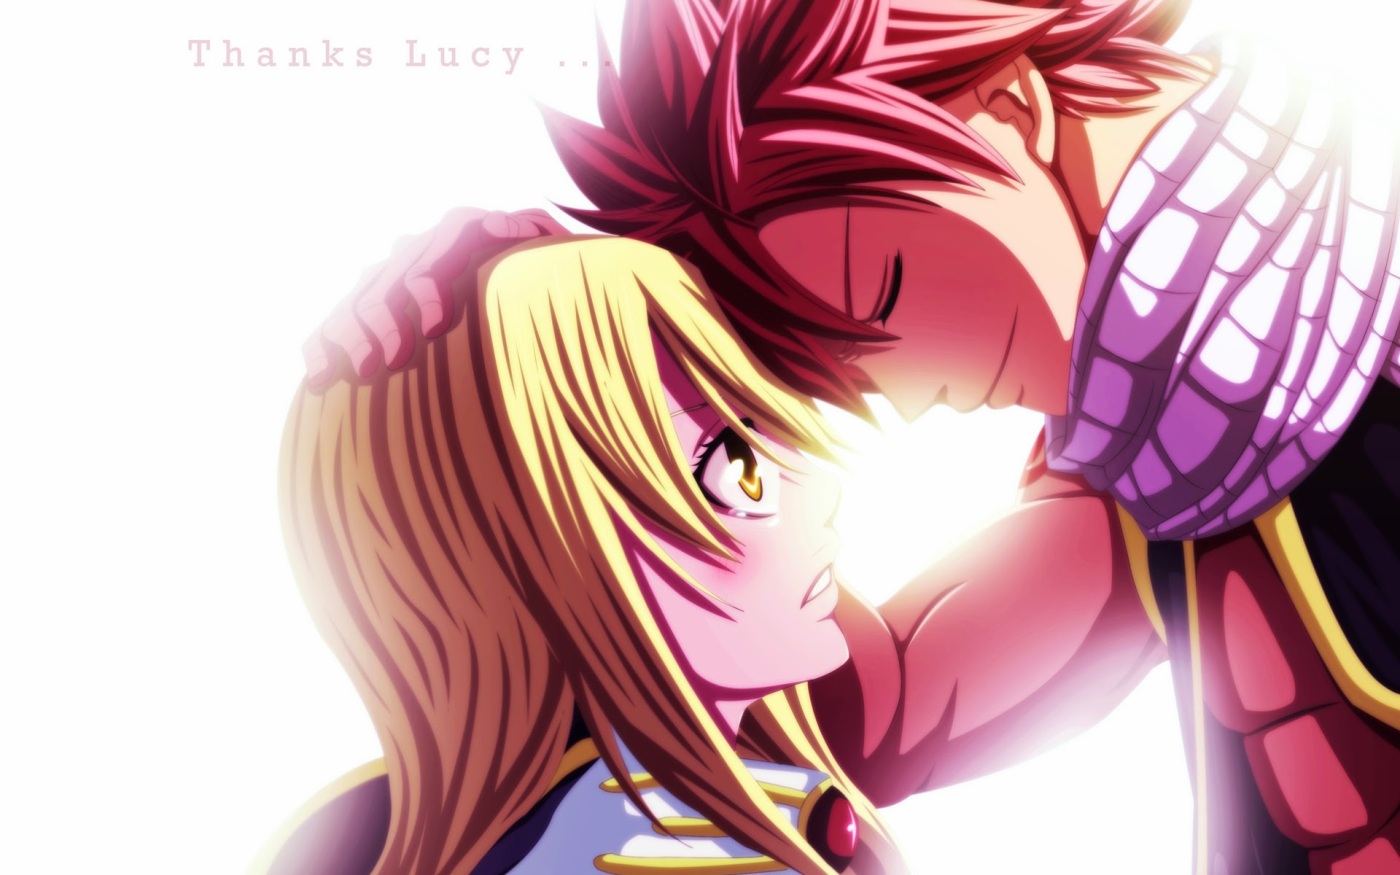 KURISU - LUCY from anime Fairy Tail